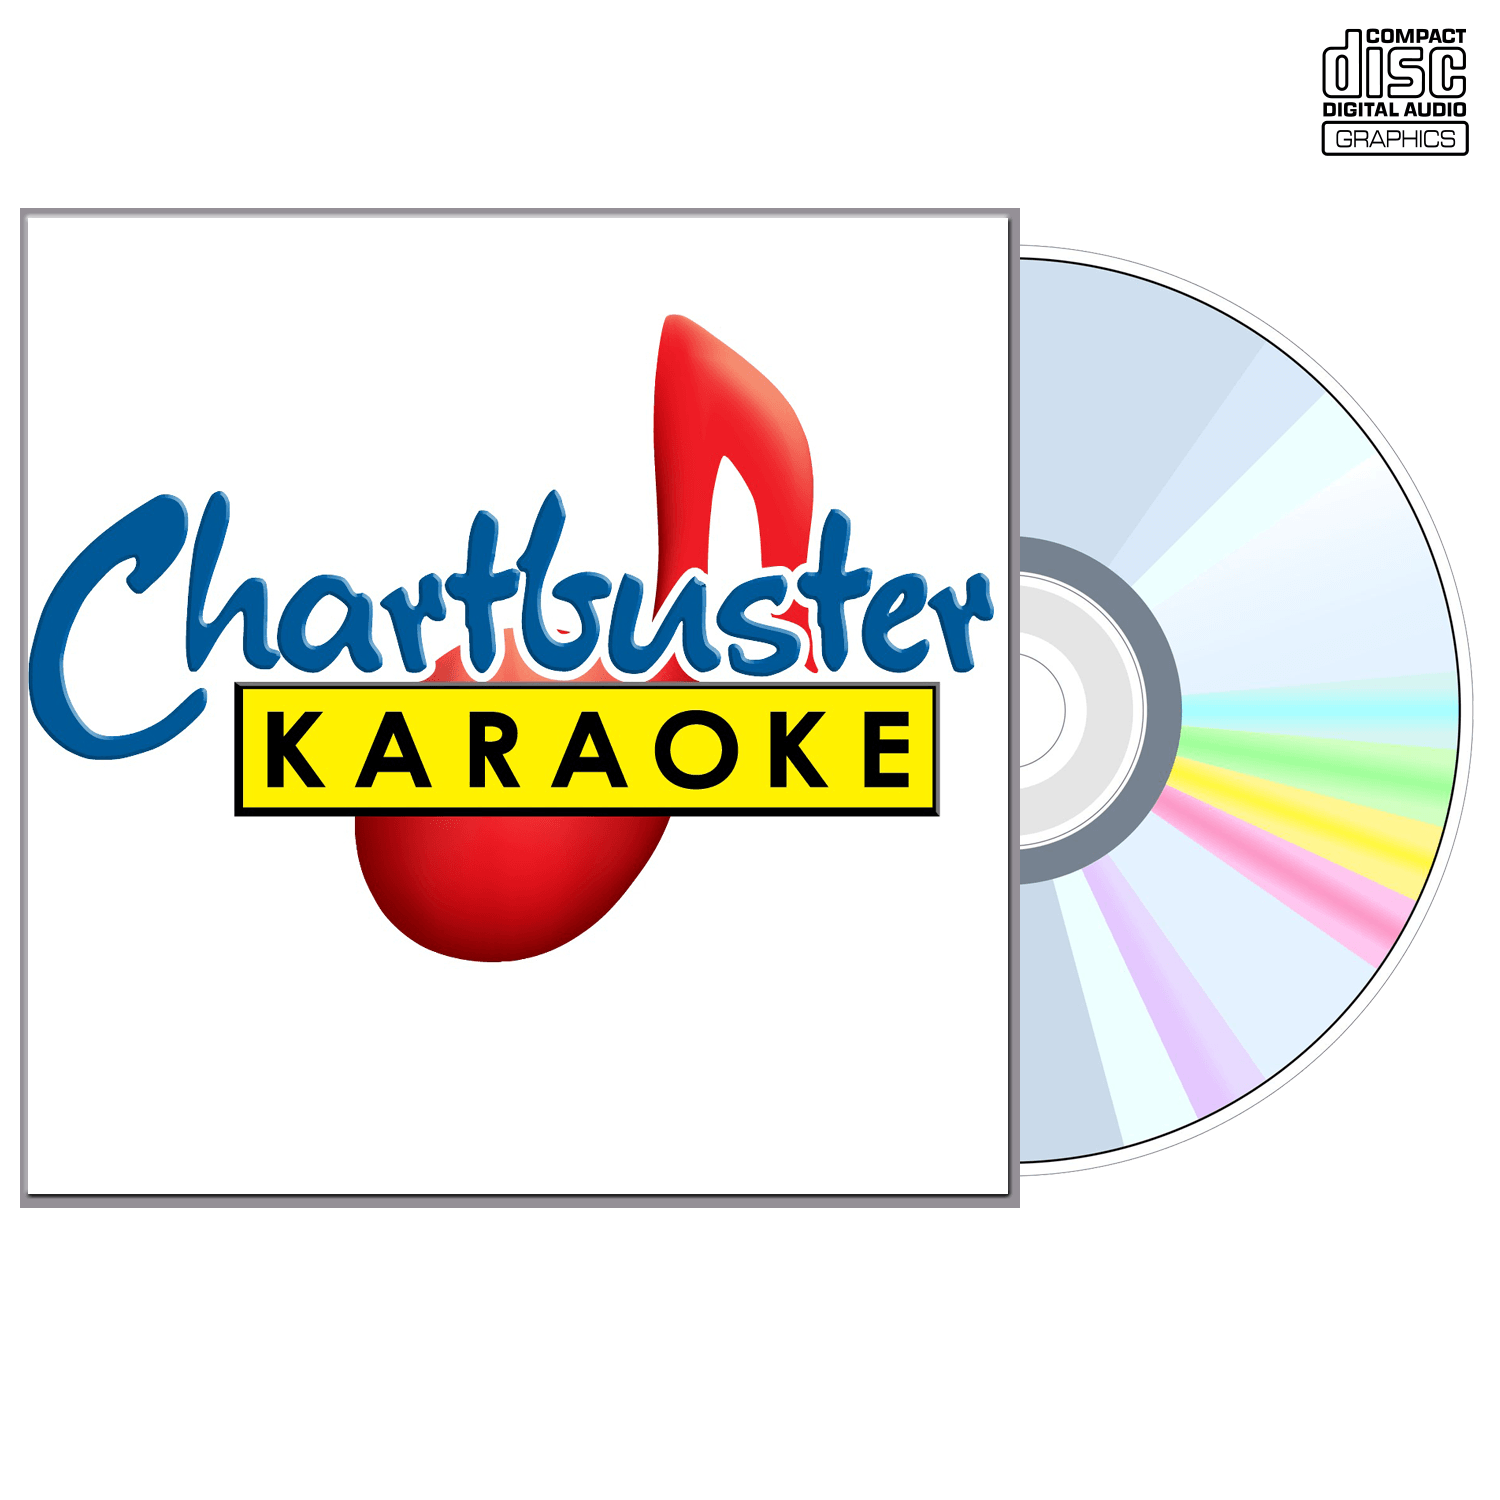 Johnny Cash Vol 2 - CD+G - Chartbuster Karaoke - Karaoke Home Entertainment